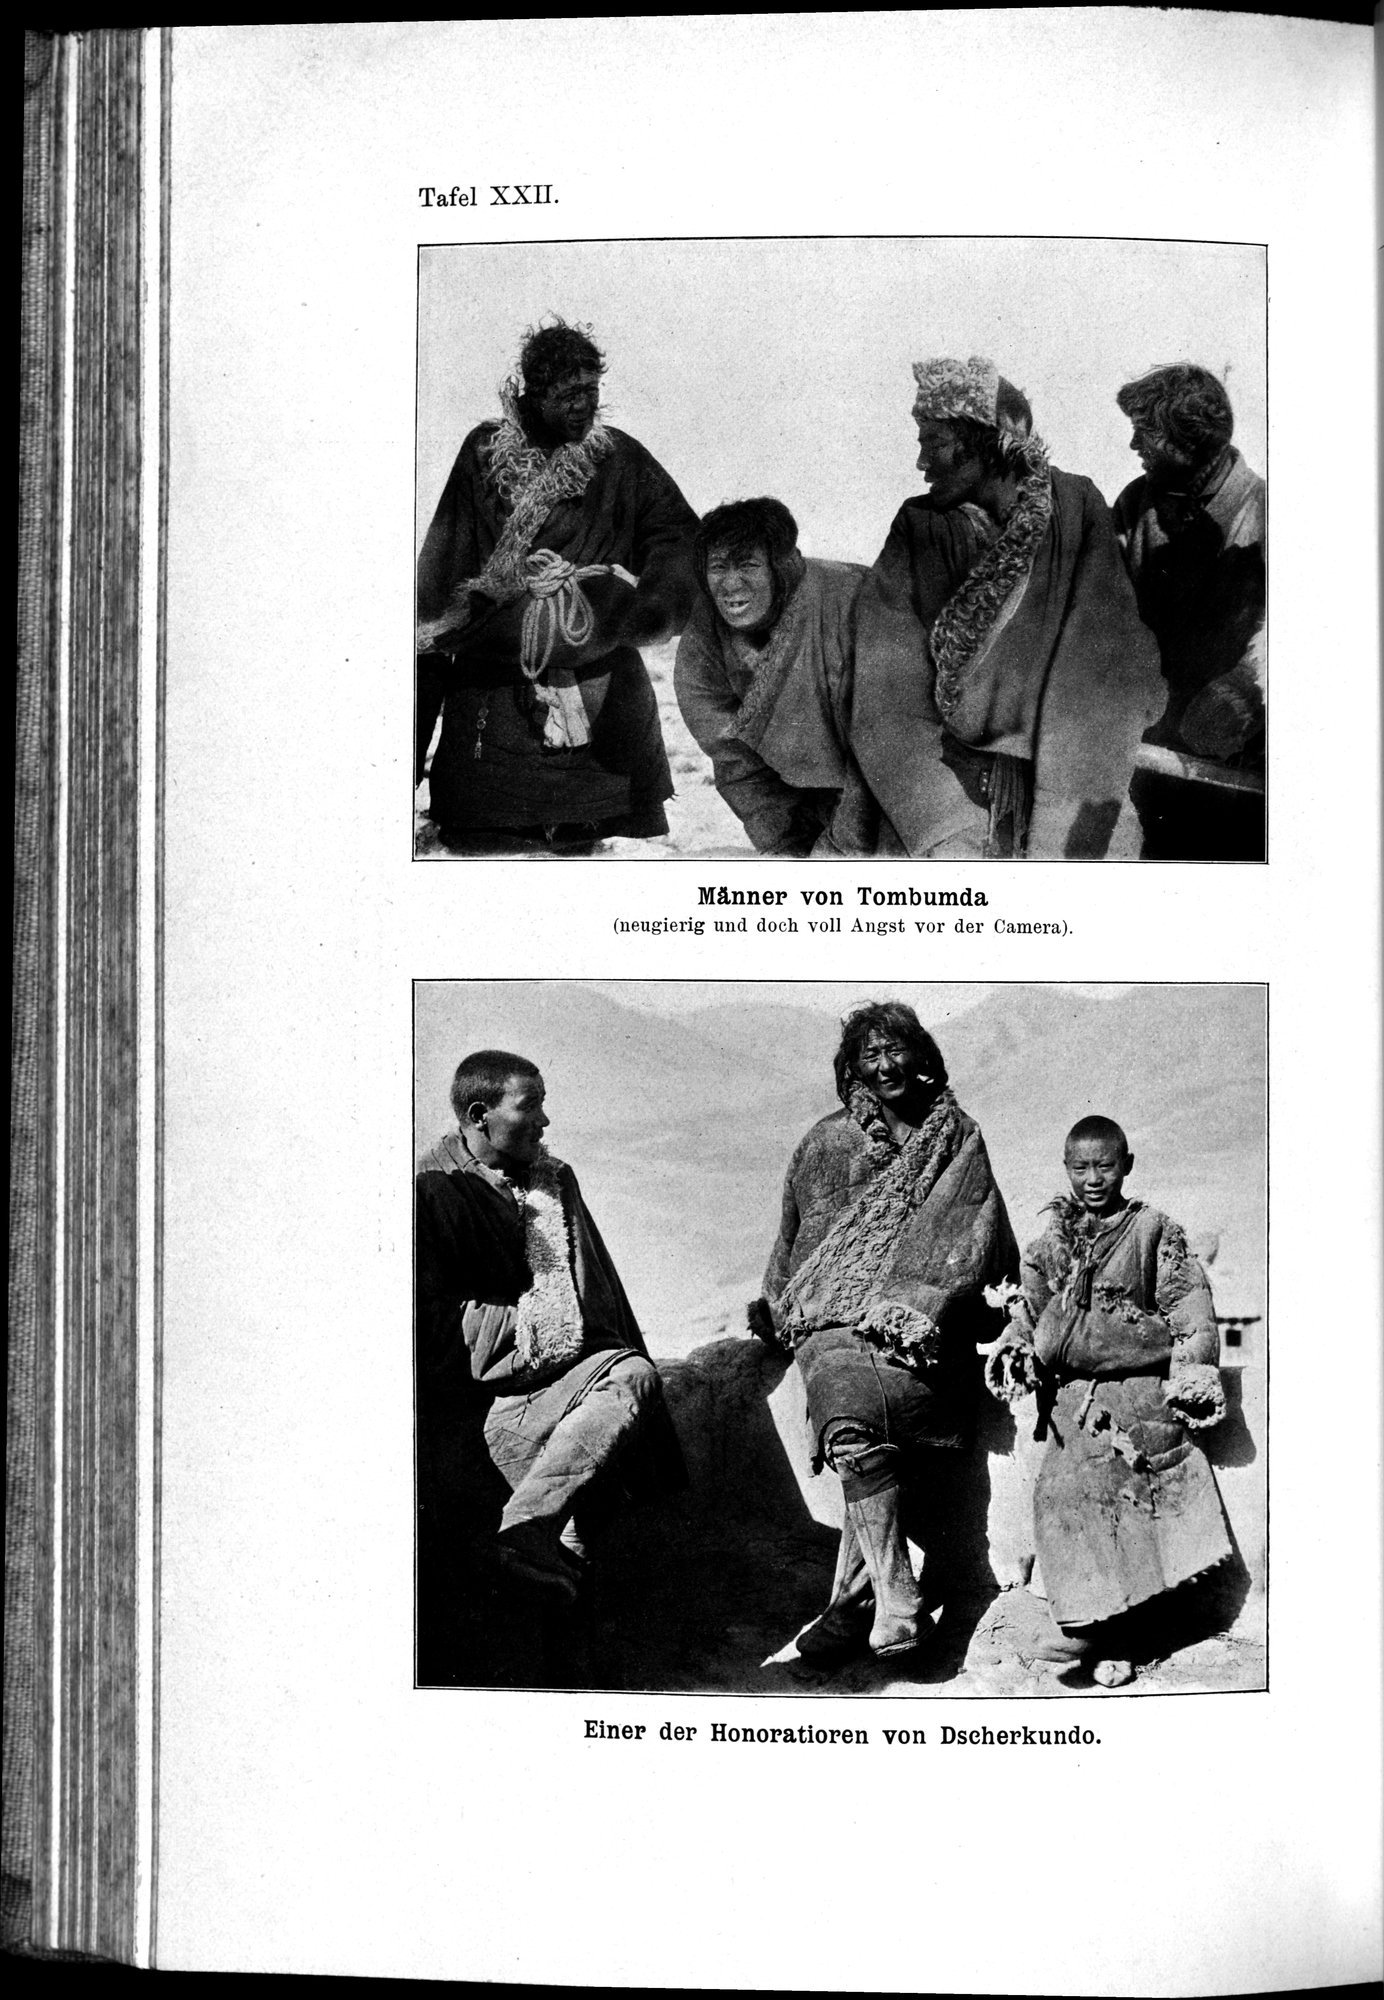 Meine Tibetreise : vol.2 / Page 144 (Grayscale High Resolution Image)